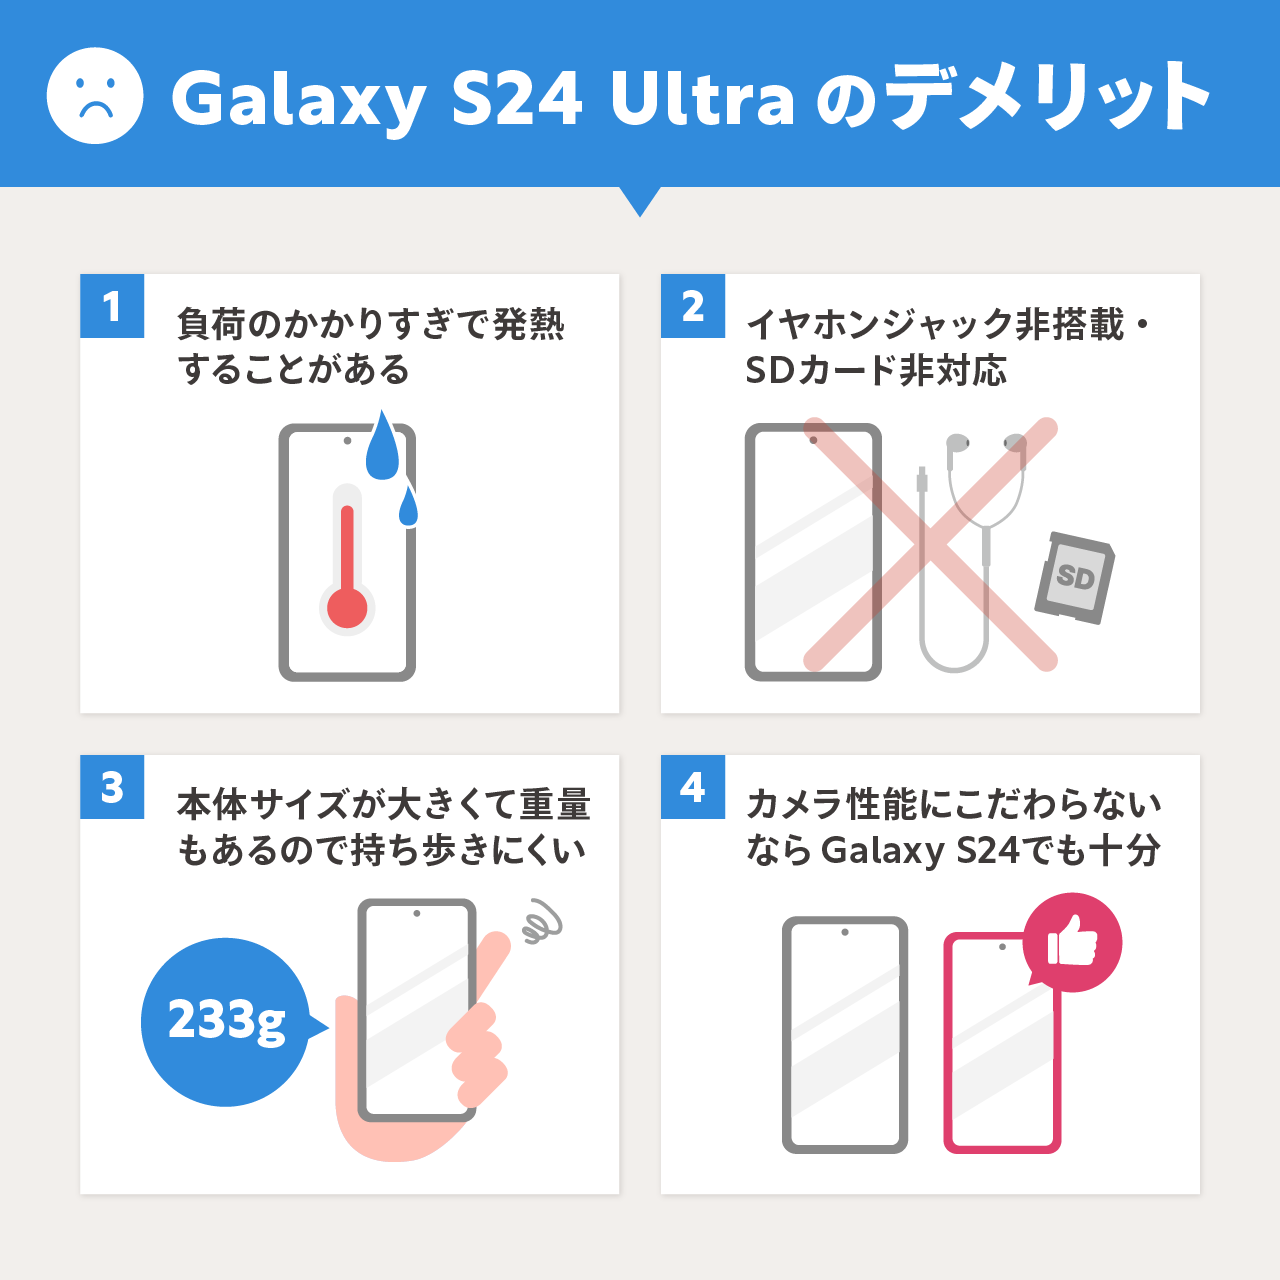 Galaxy S24 Ultraのデメリット